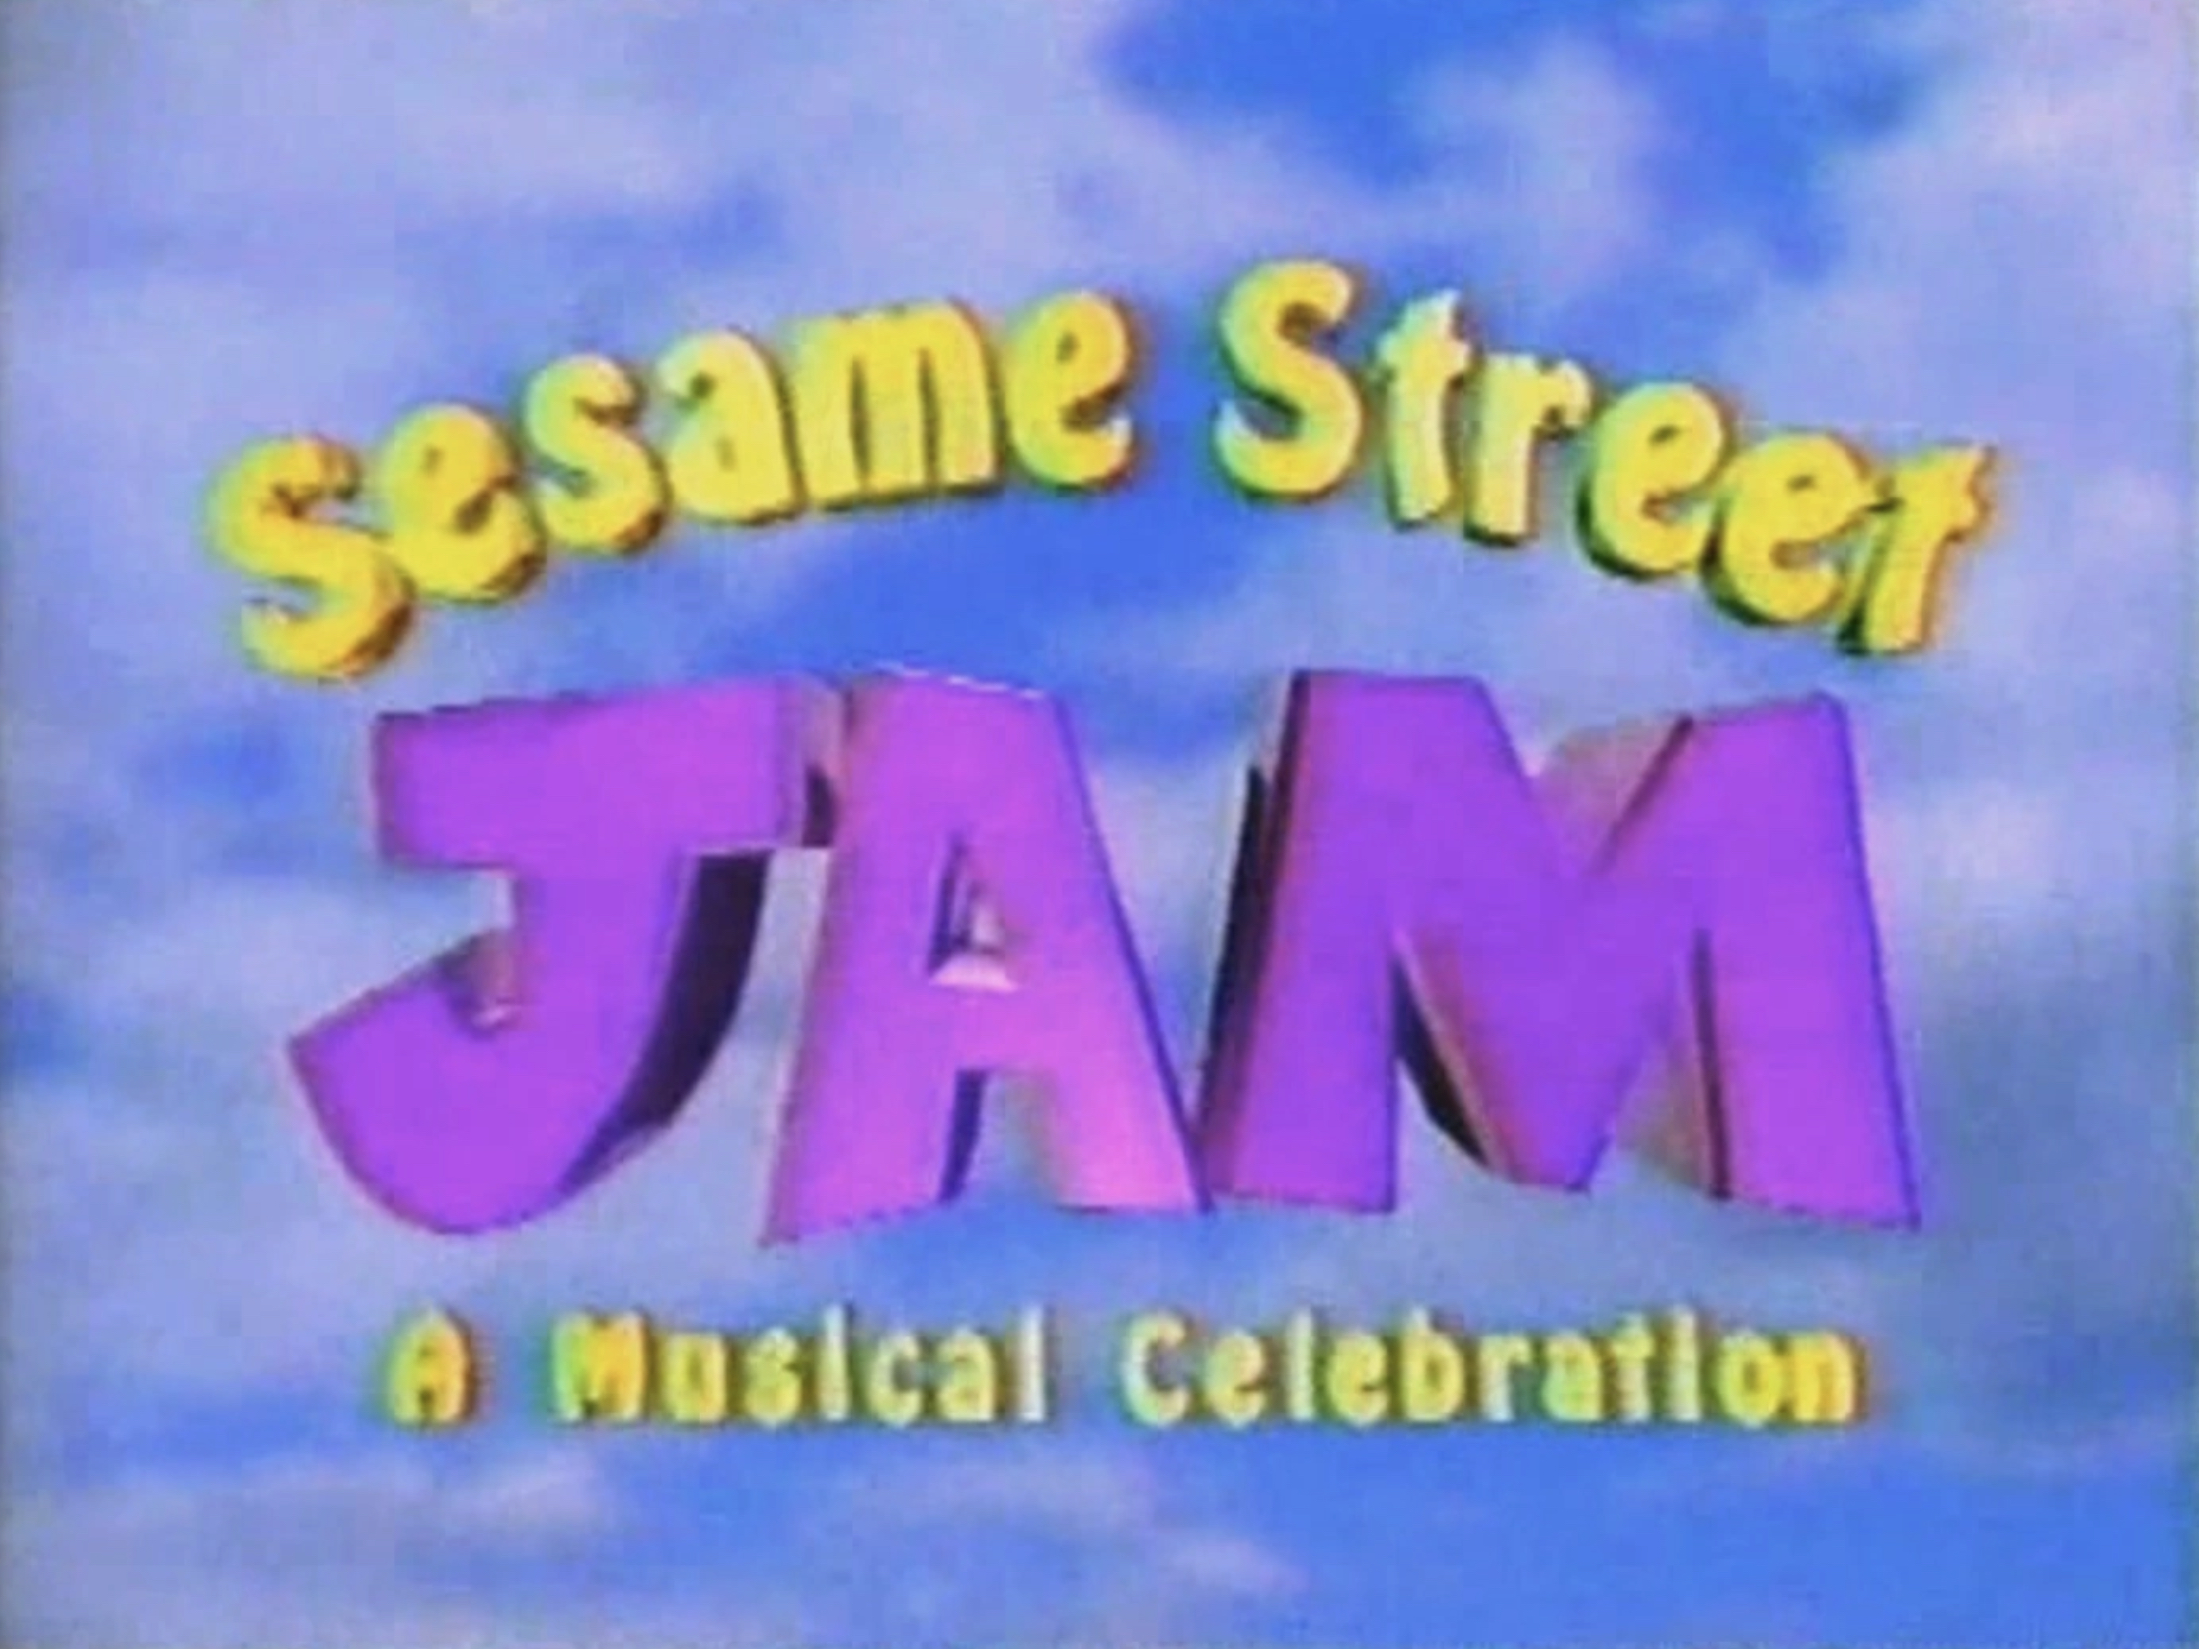 Sesame street jam logo.jpeg